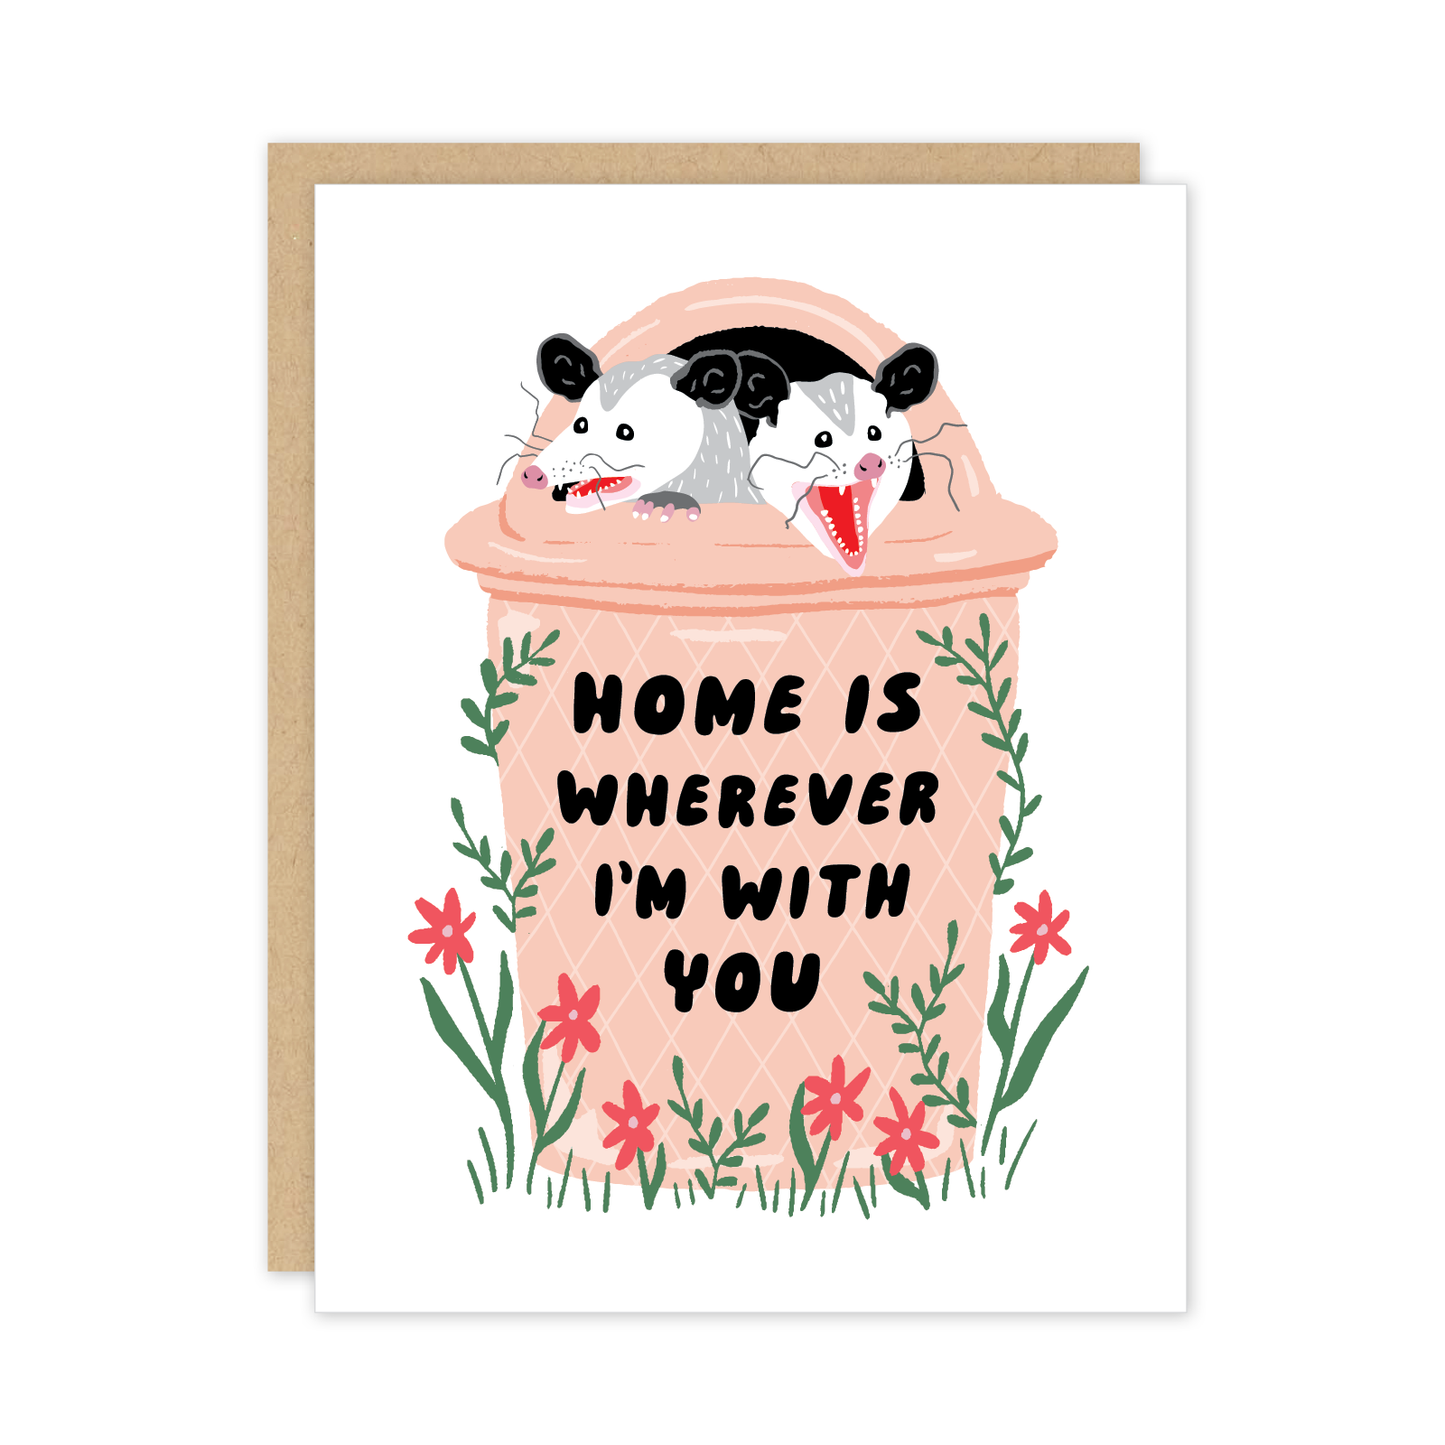 Possum Home Greeting Card